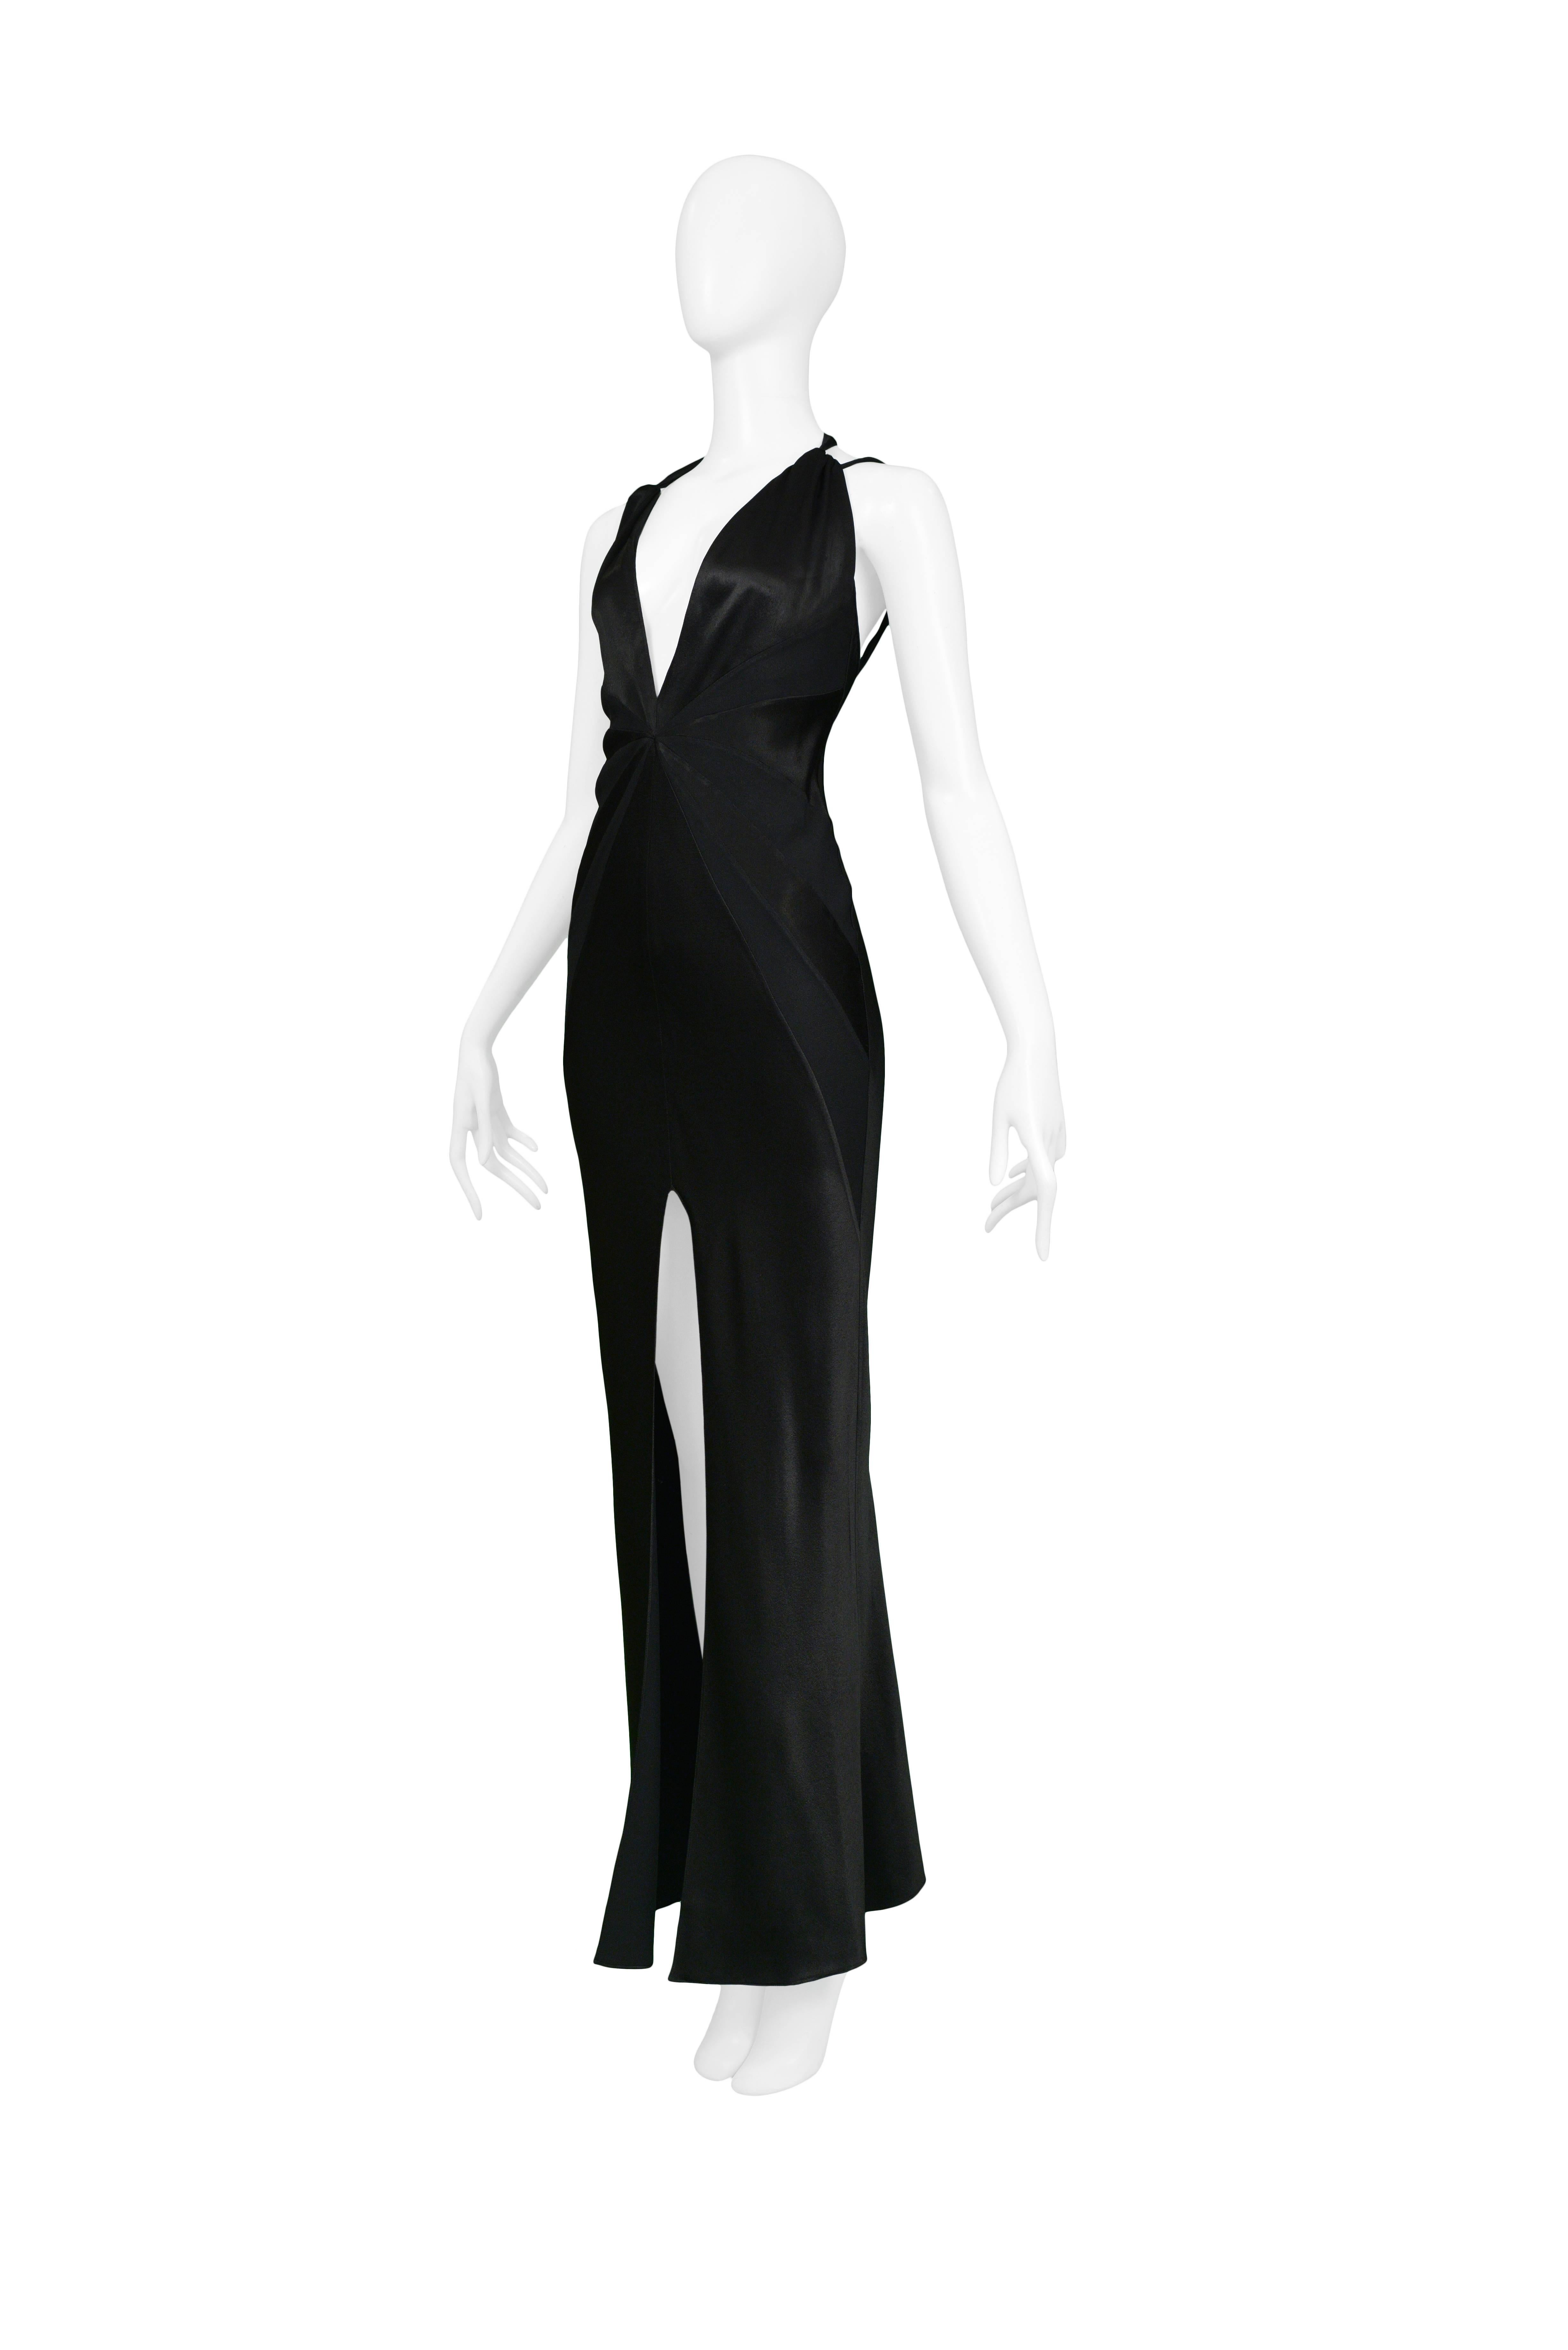 BLACK SATIN JEAN HARLOW GOWN
Condition : Excellent Vintage Condition
Size : 38
Vintage Dior by John Galliano black satin 